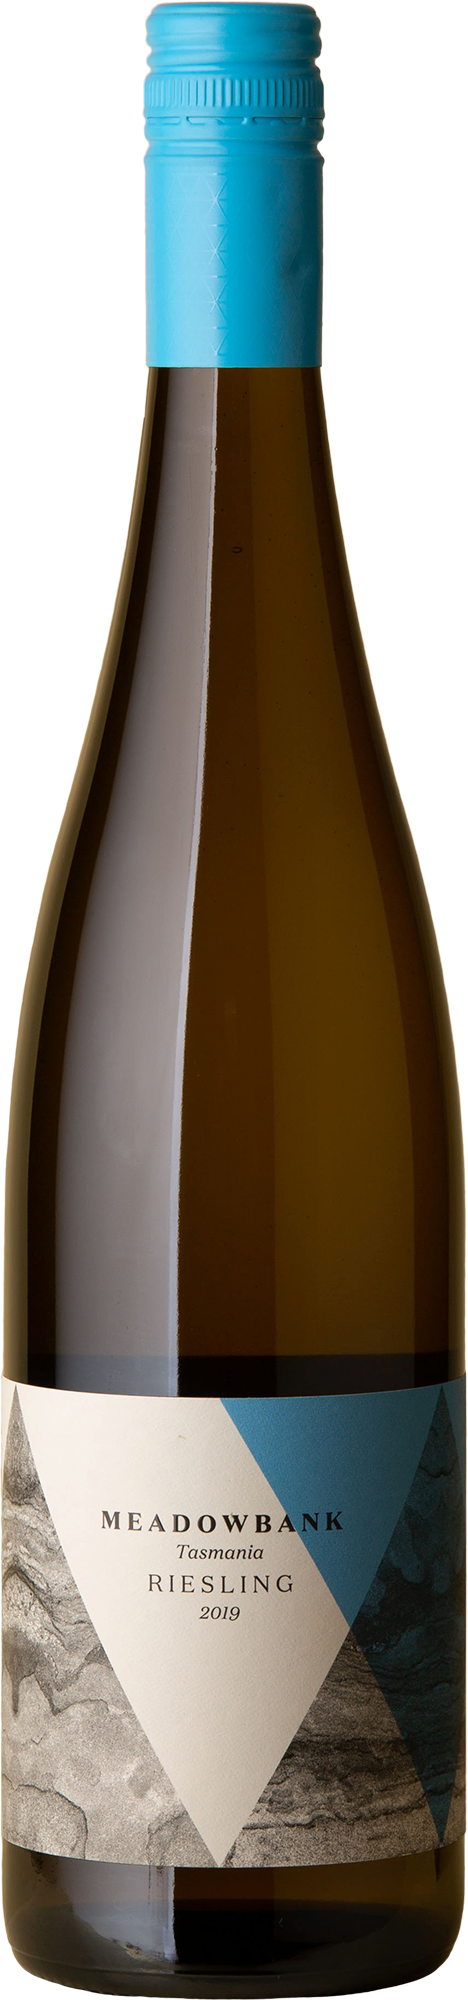 Meadowbank - Riesling 2019 White Wine